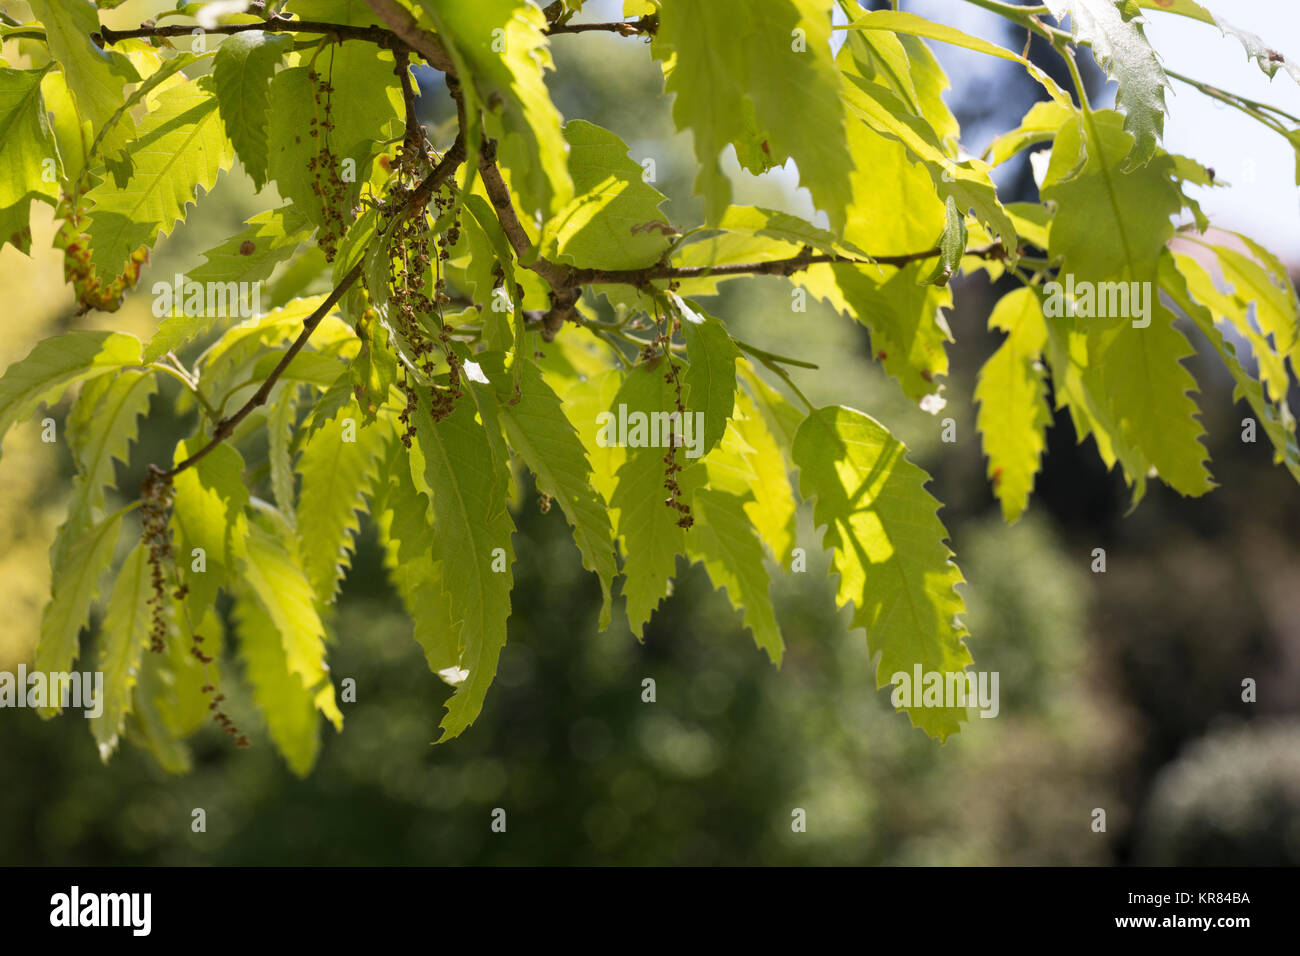 Libanon-Eiche, Libanoneiche, Quercus libani, Quercus vesca, Lebanon oak, Le chêne du Liban Stock Photo